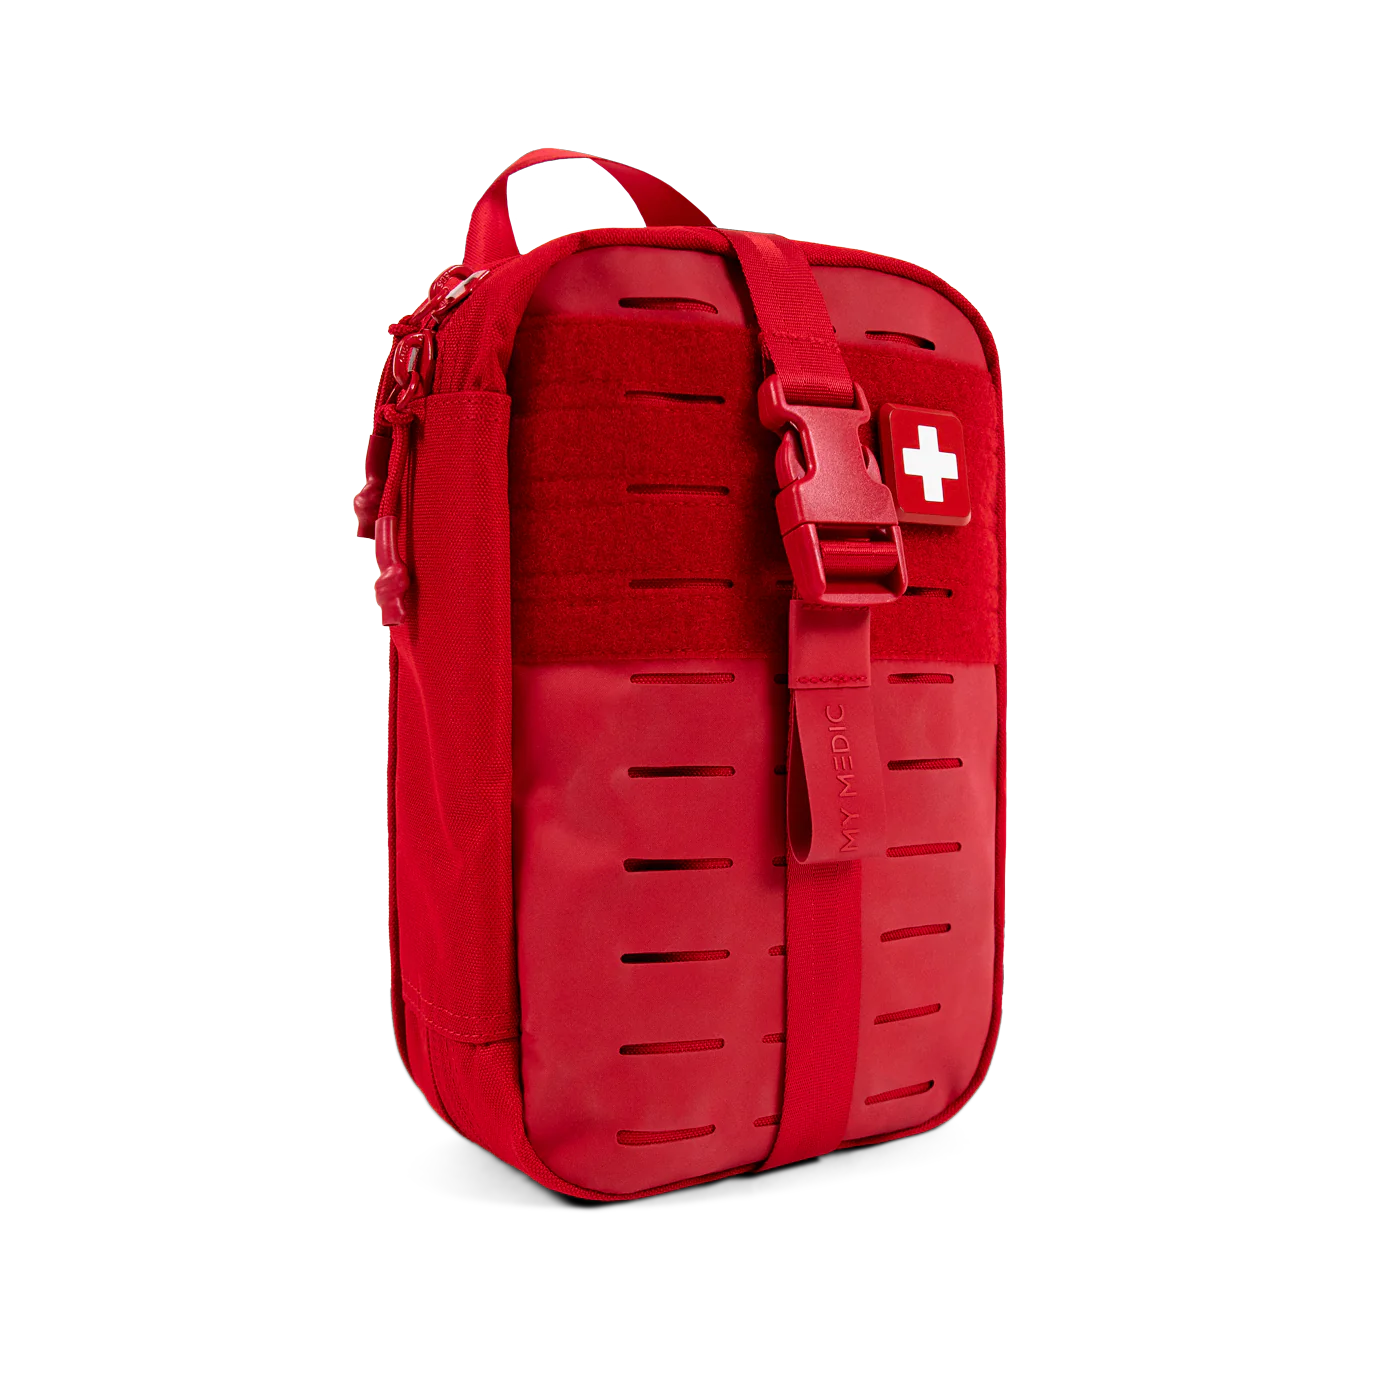 My Medic MYFAK Pro First Aid Kit